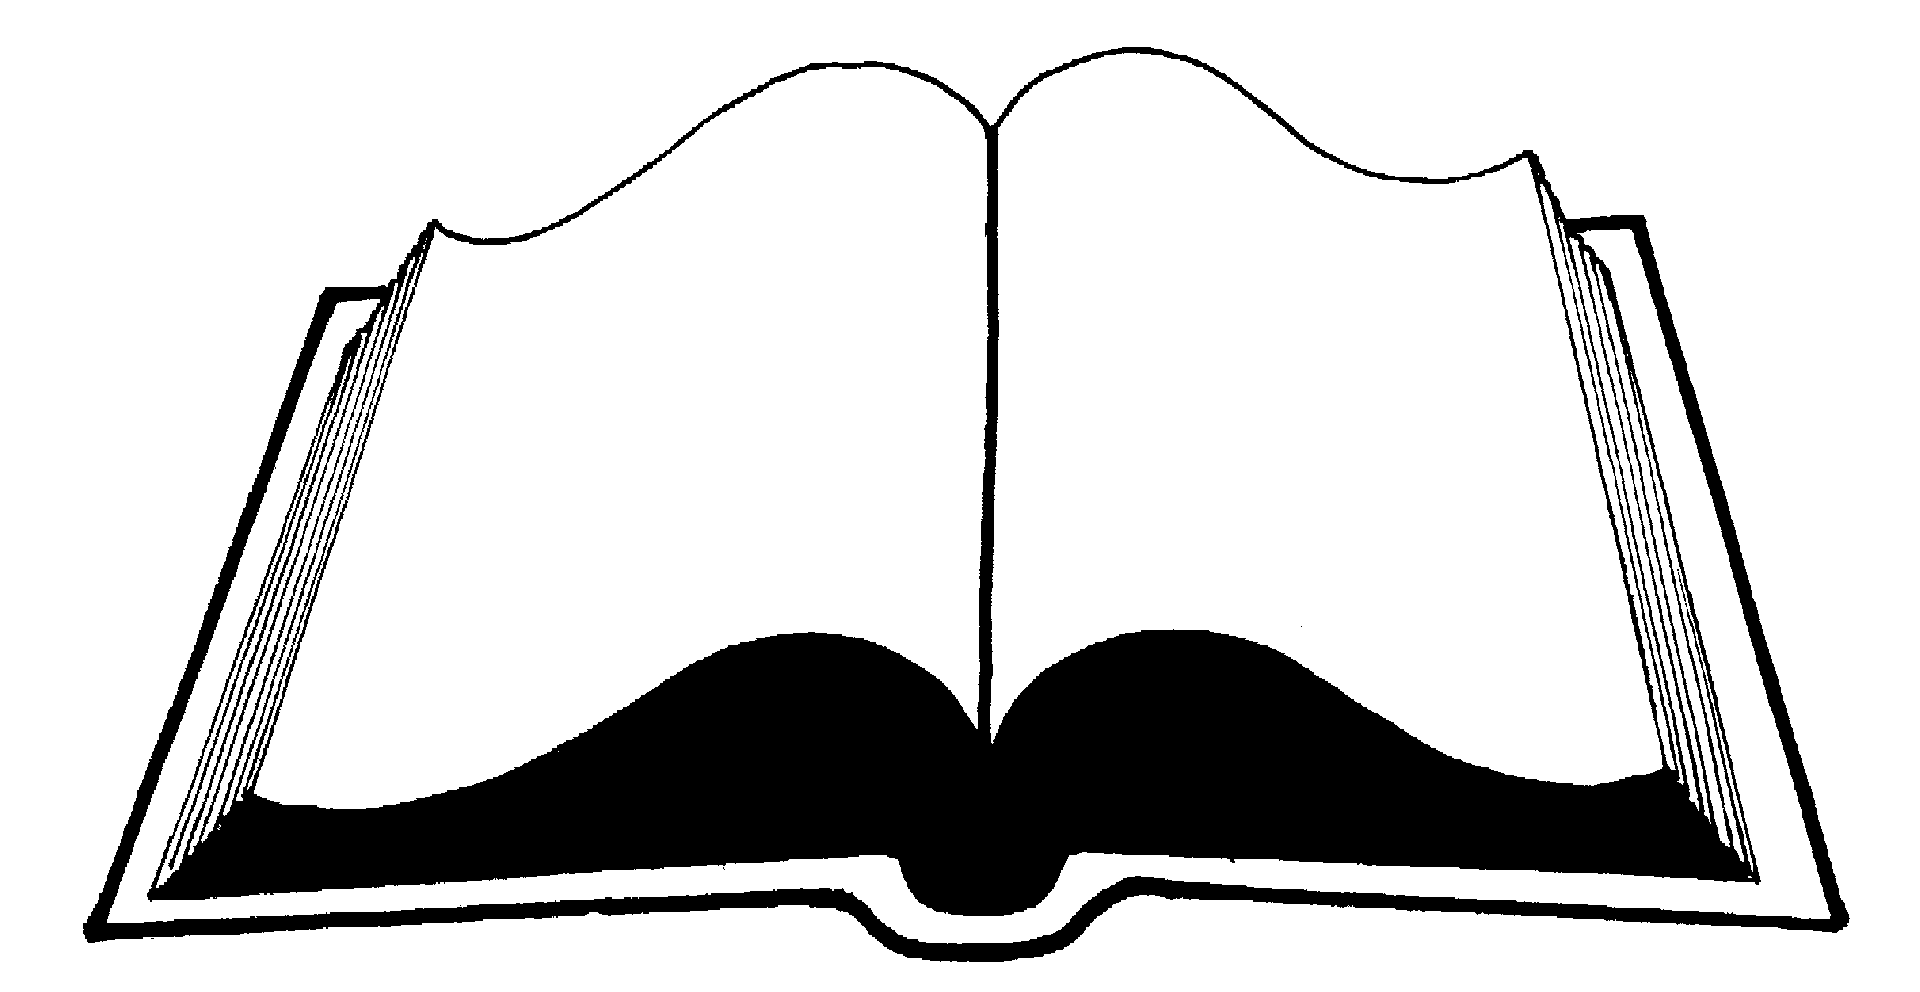 Open Book Clipart